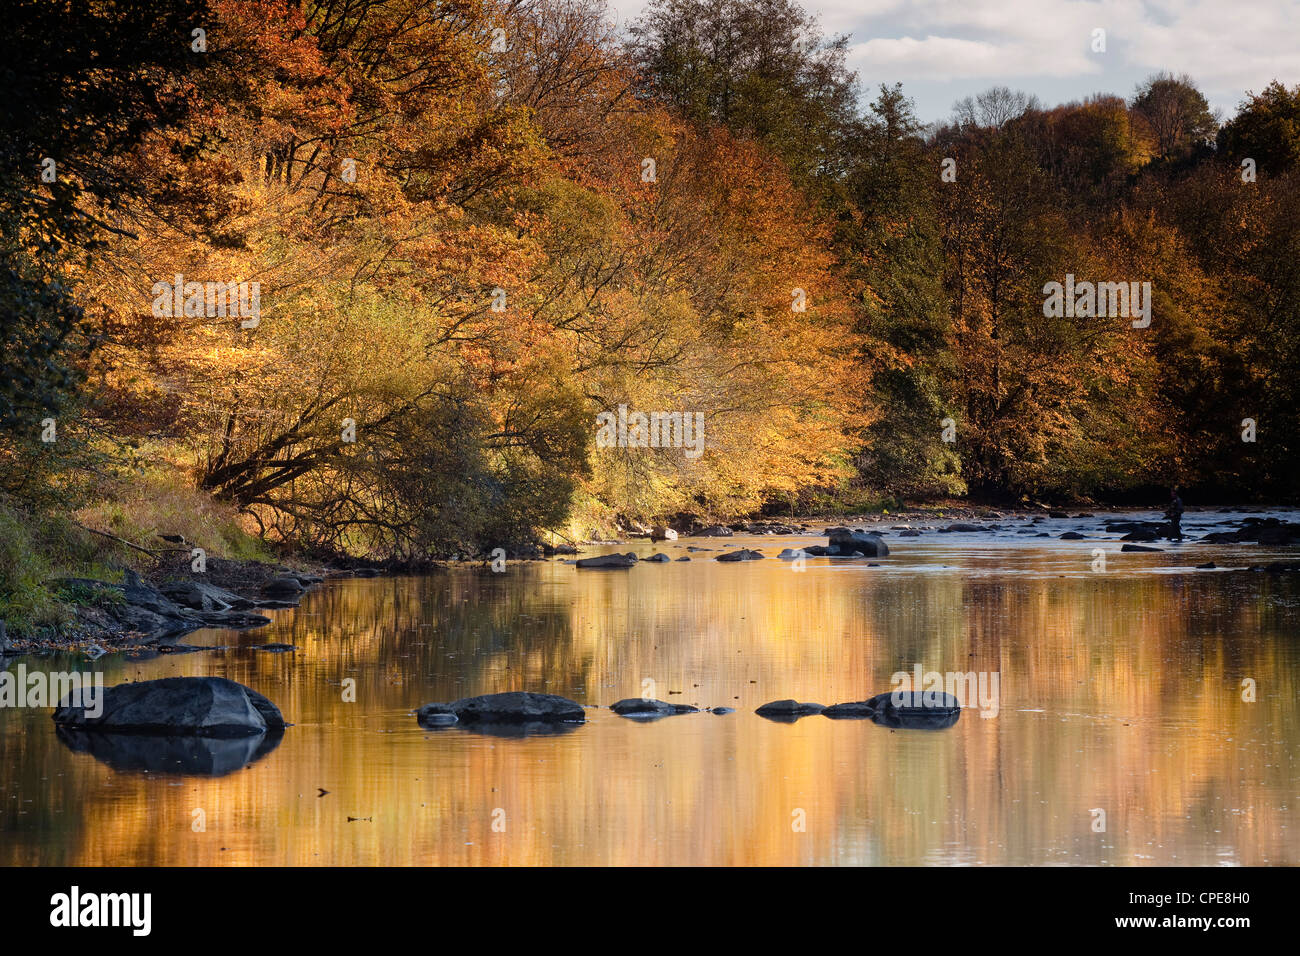 Flusses Creuse, einer bevorzugten Gegend des Flusses der Künstler Claude Monet, Limousin, Frankreich Stockfoto